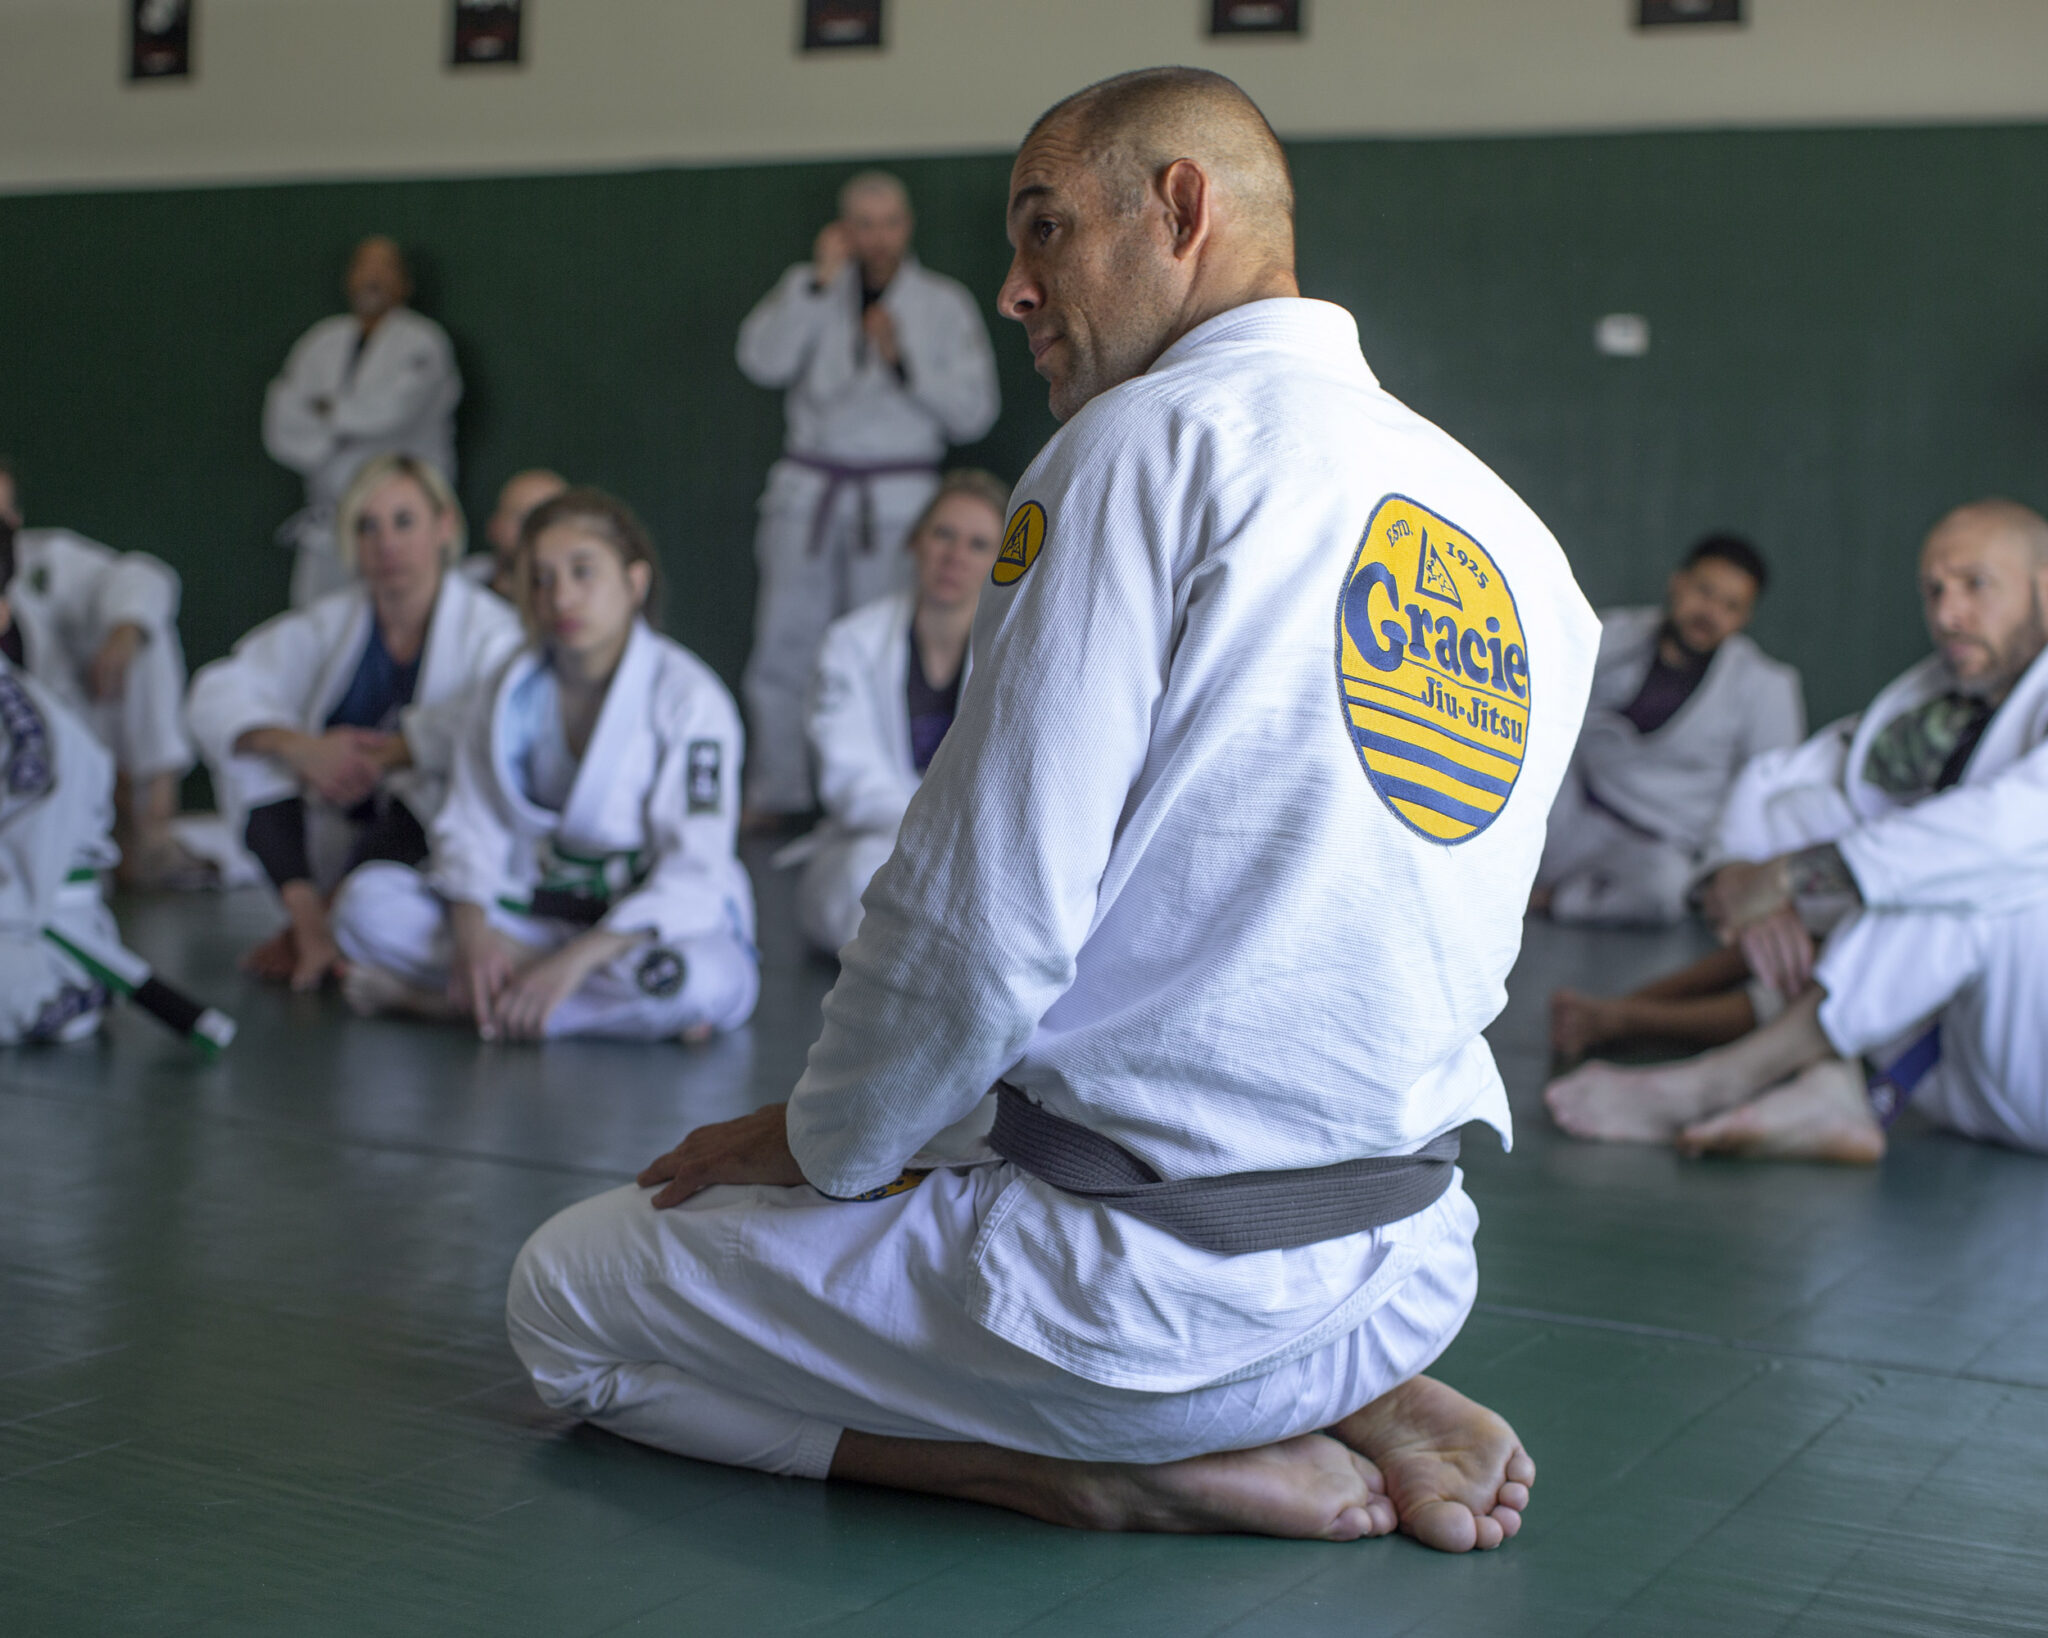 Ryron Gracie leading a self-defense jiu jitsu seminar in Aurora, Colorado